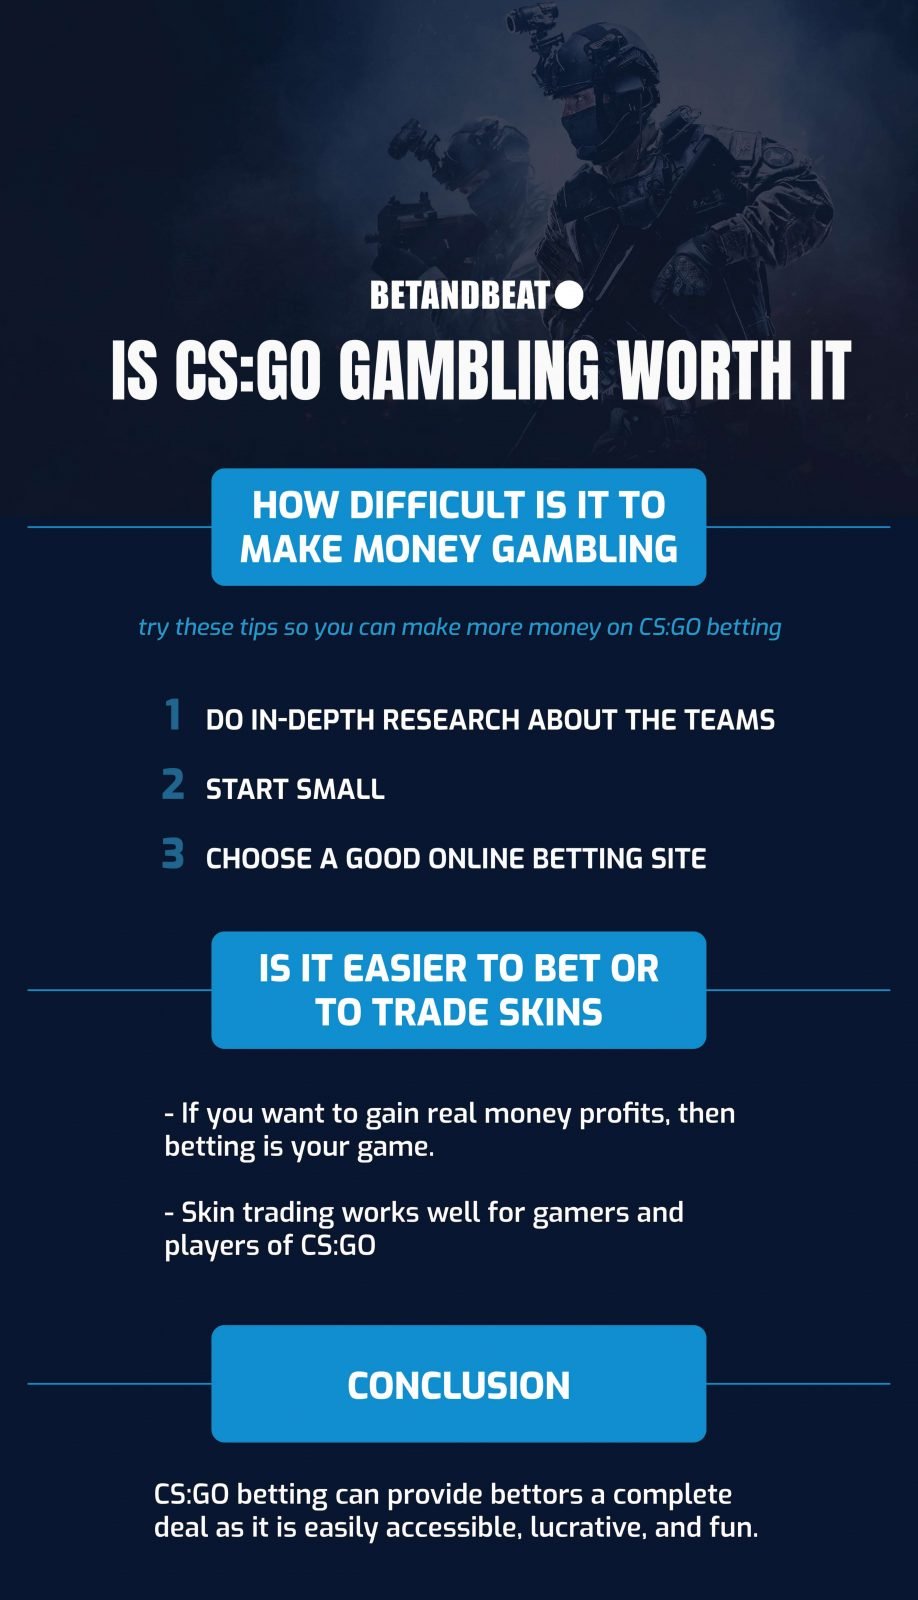 Is CS:GO gambling worth it?